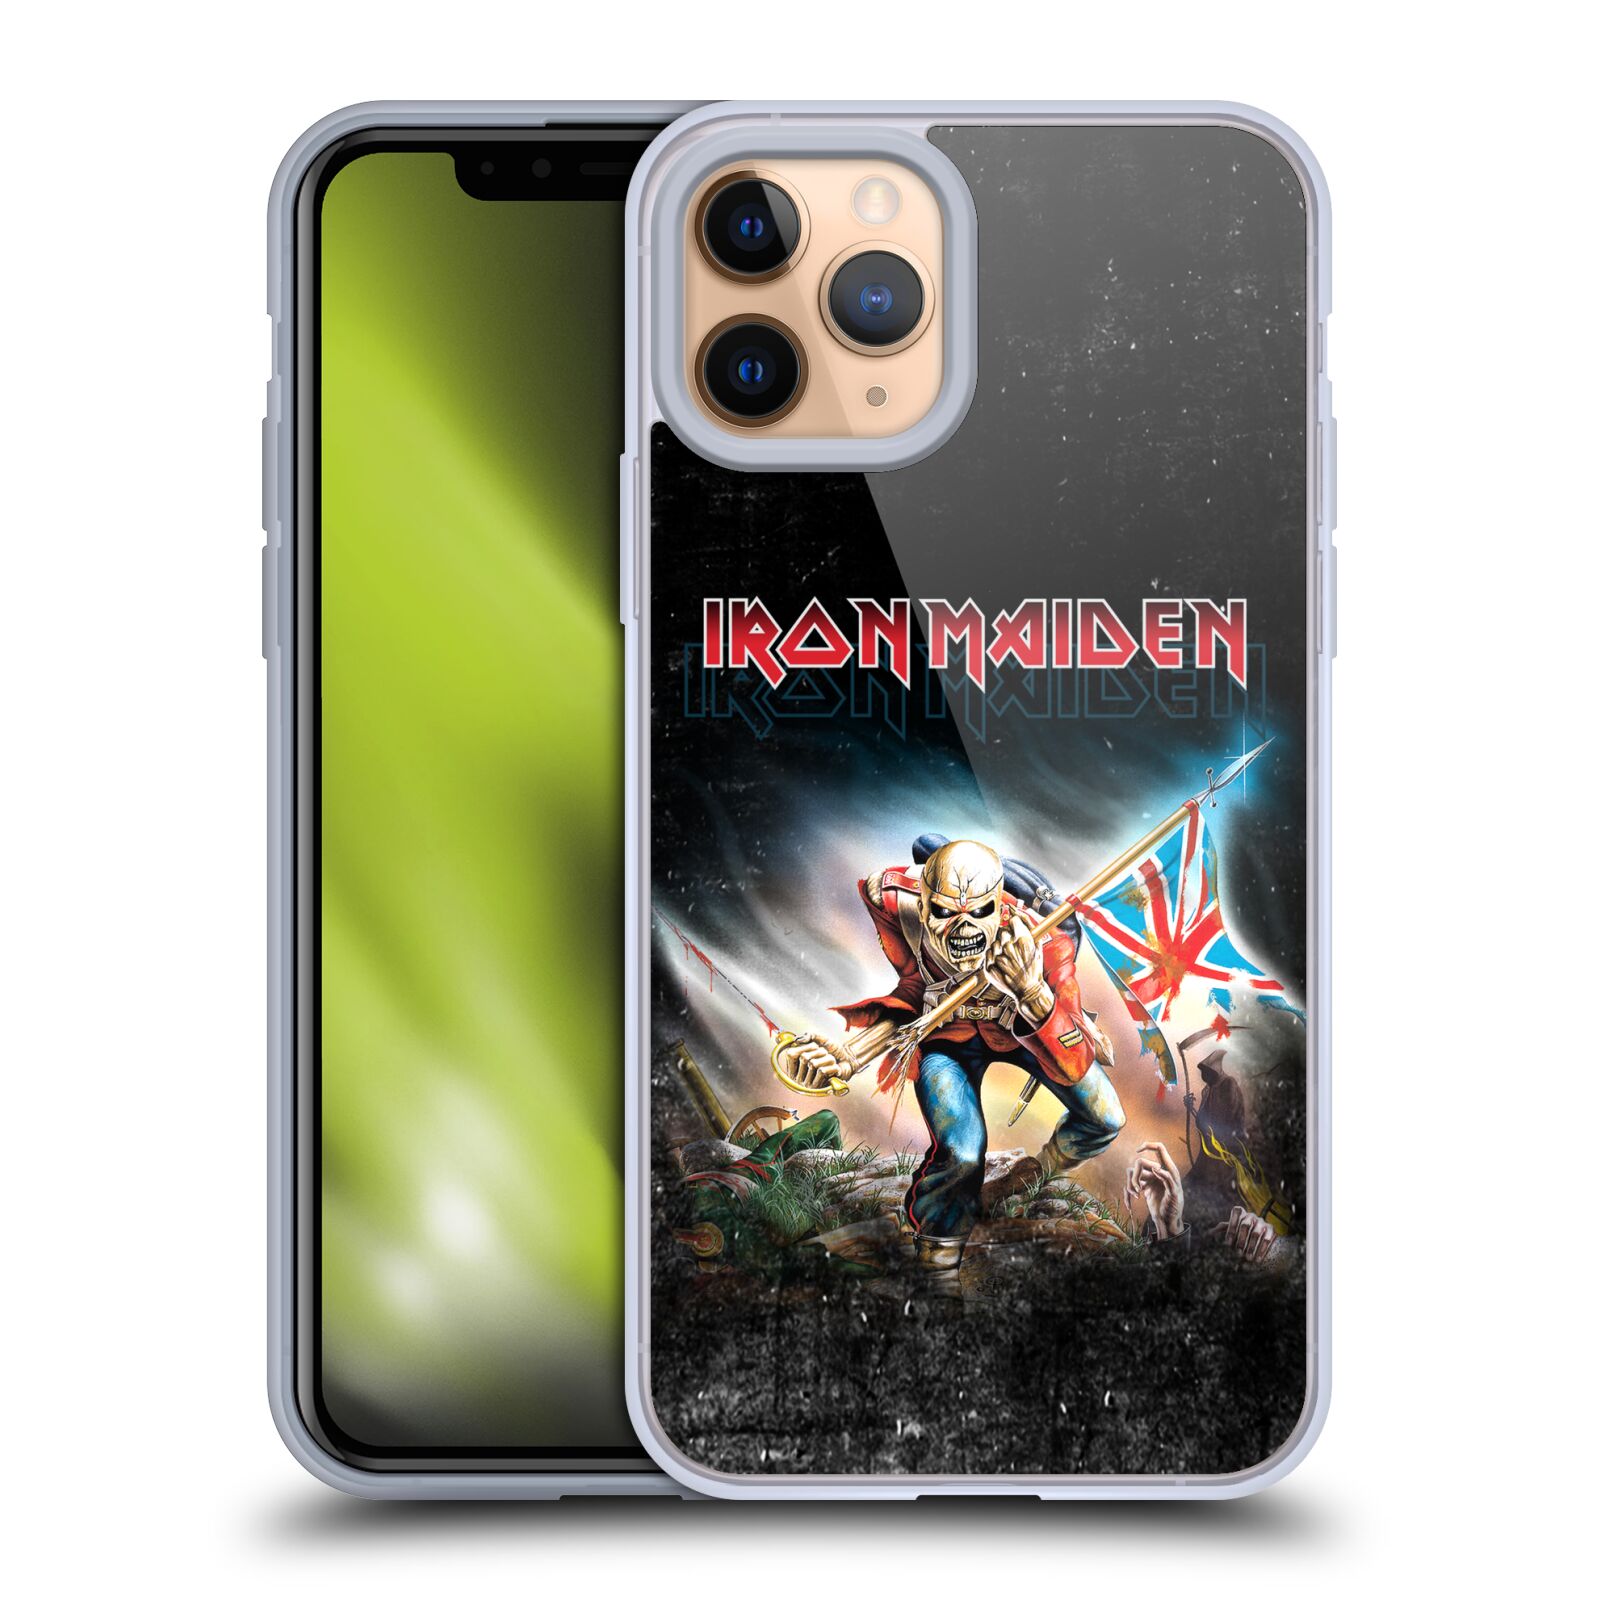 Silikonové pouzdro na mobil Apple iPhone 11 Pro - Head Case - Iron Maiden - Trooper 2016 (Silikonový kryt, obal, pouzdro na mobilní telefon Apple iPhone 11 Pro s displejem 5,8" s motivem Iron Maiden - Trooper 2016)